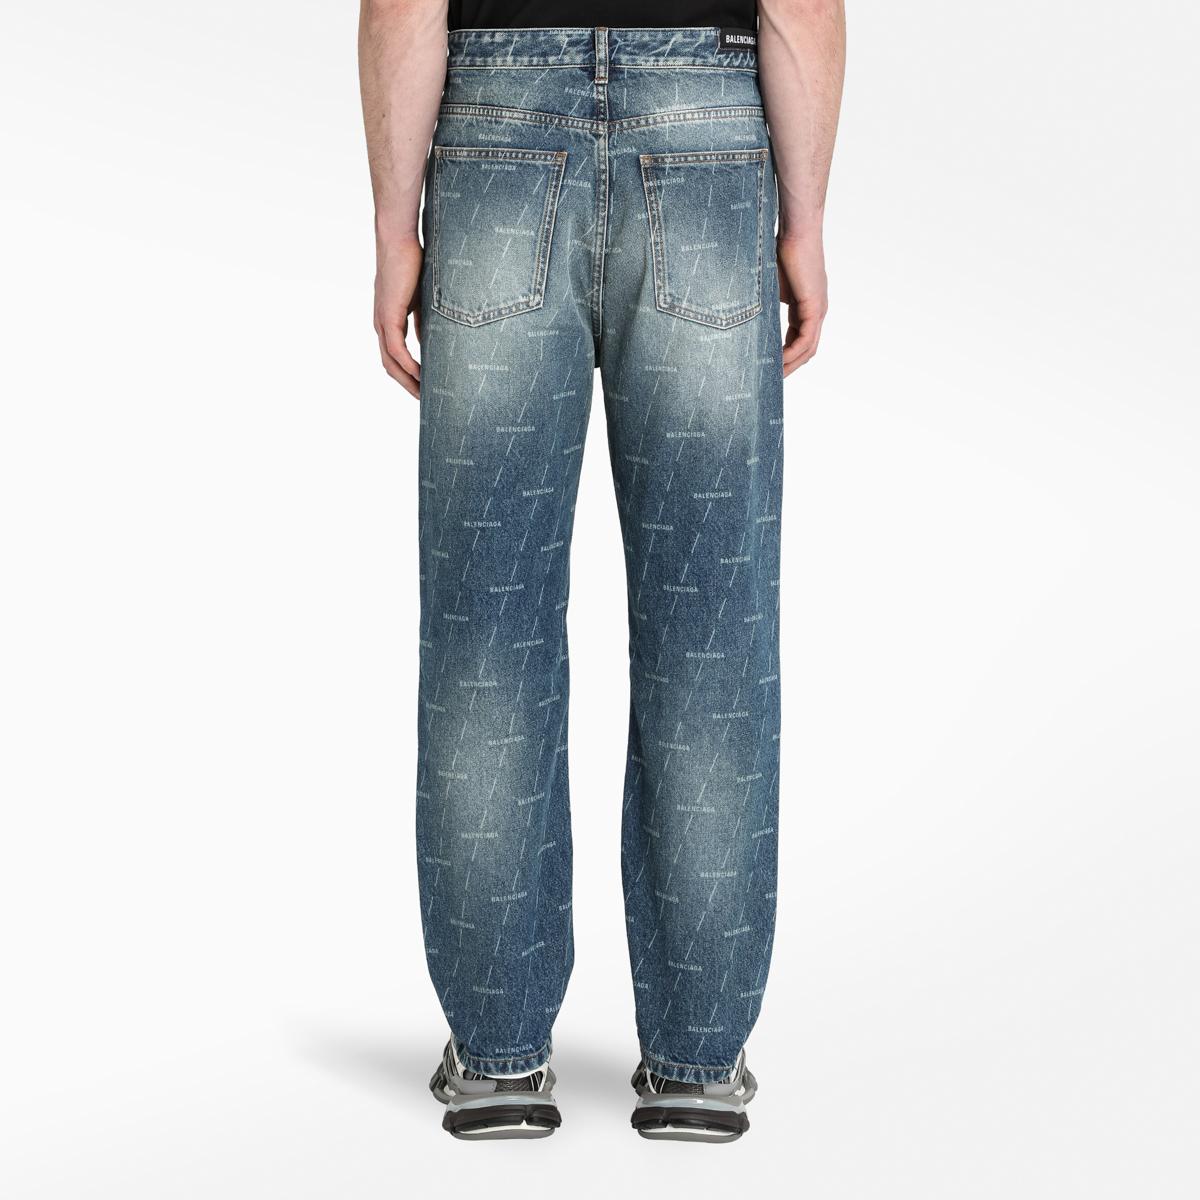 Balenciaga Denim All Over Logo Print Jeans in Blue for Men - Lyst